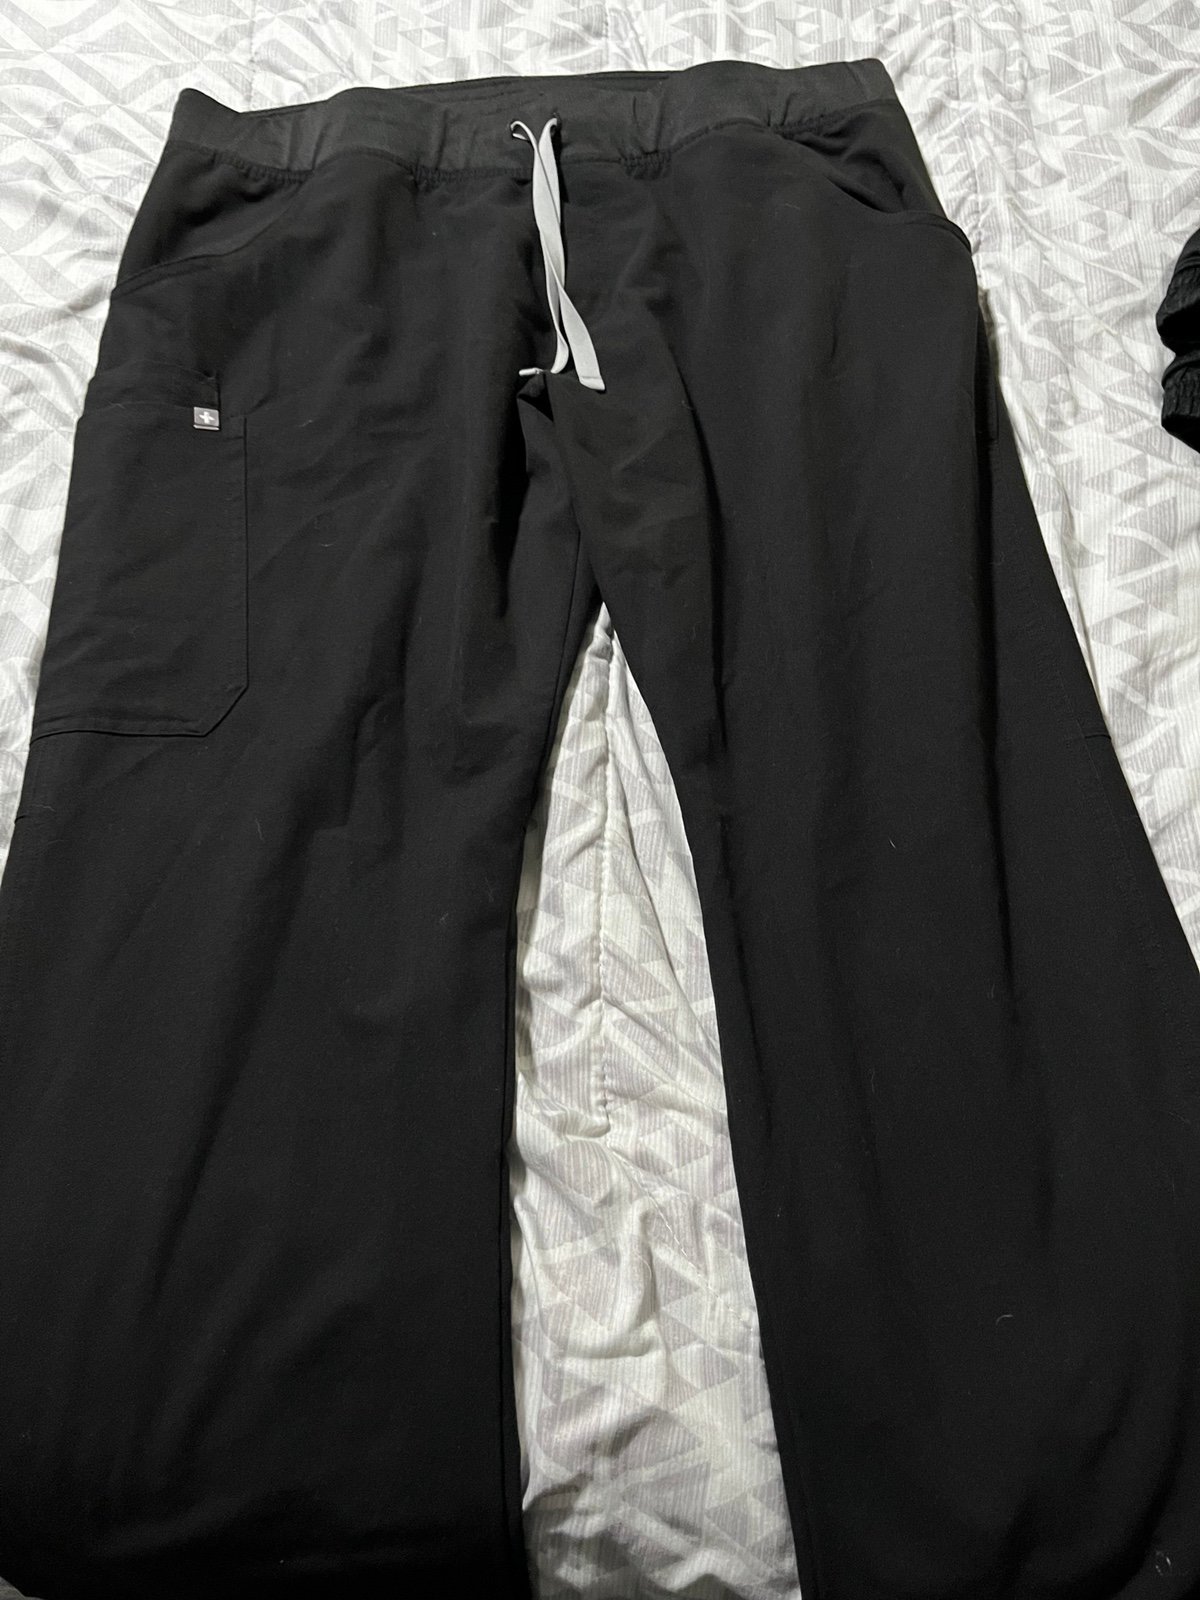 large selection FIG Clothing Kade Cargo Scrub Pants in Black PmD8VjLC4 on sale